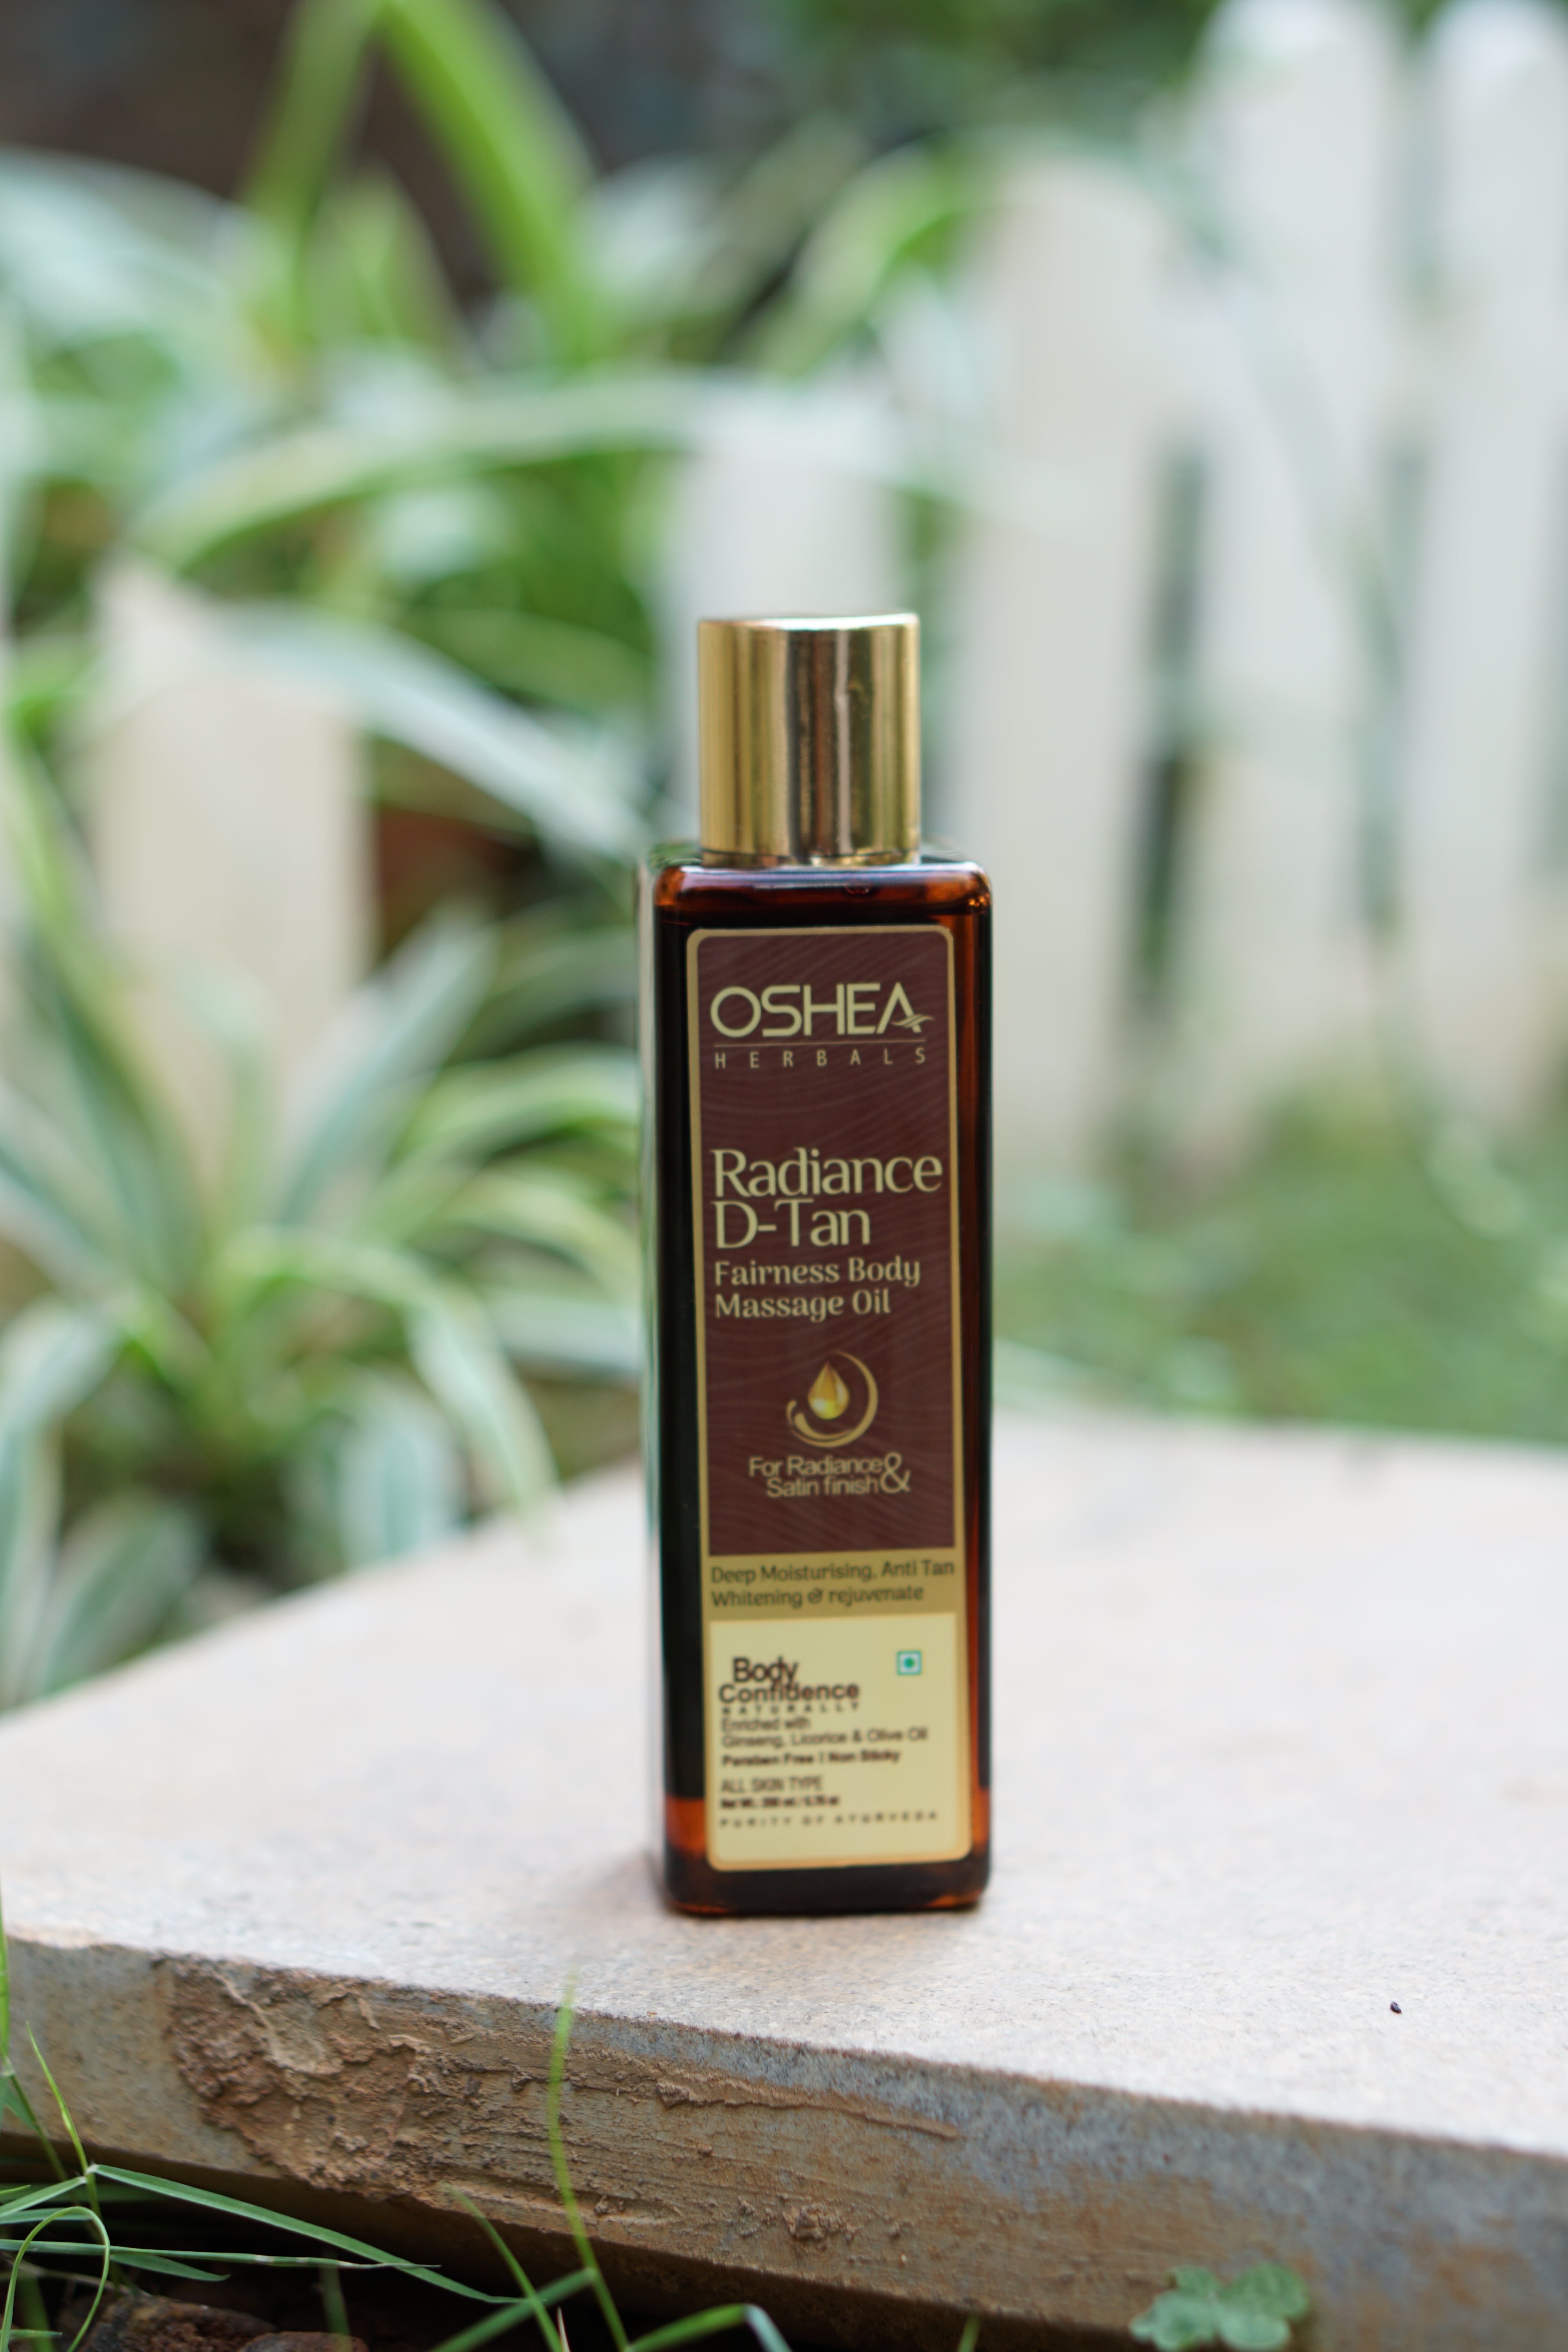 Oshea’s Radiance D-Tan Fairness Body Massage Oil Review